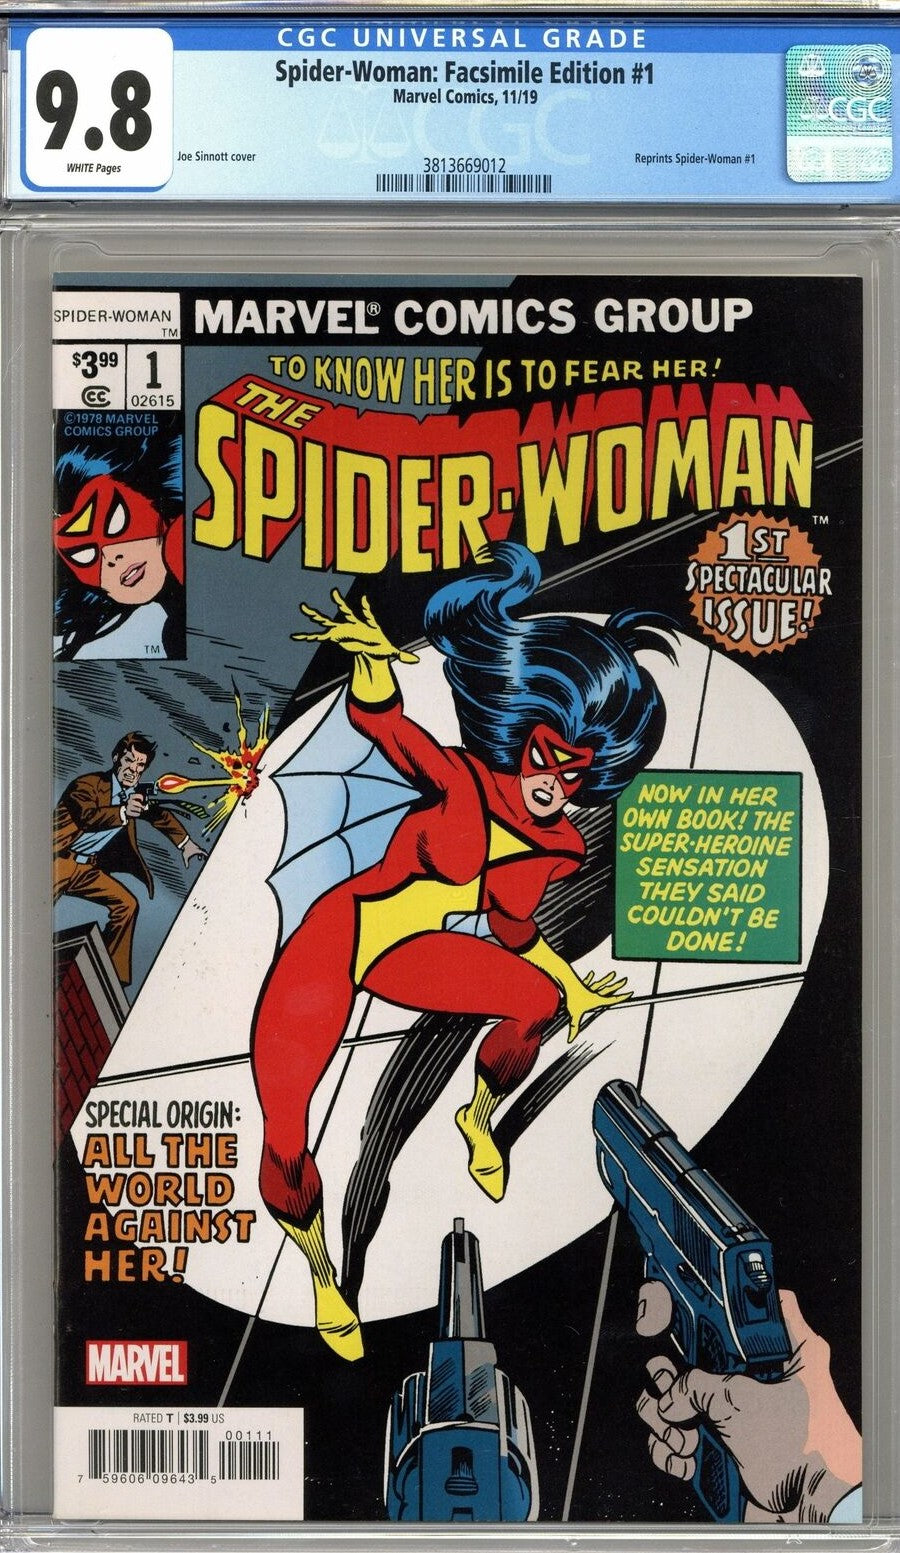 Spider-Woman #1 Facsimile Edition CGC 9.8 (Marvel Comics)